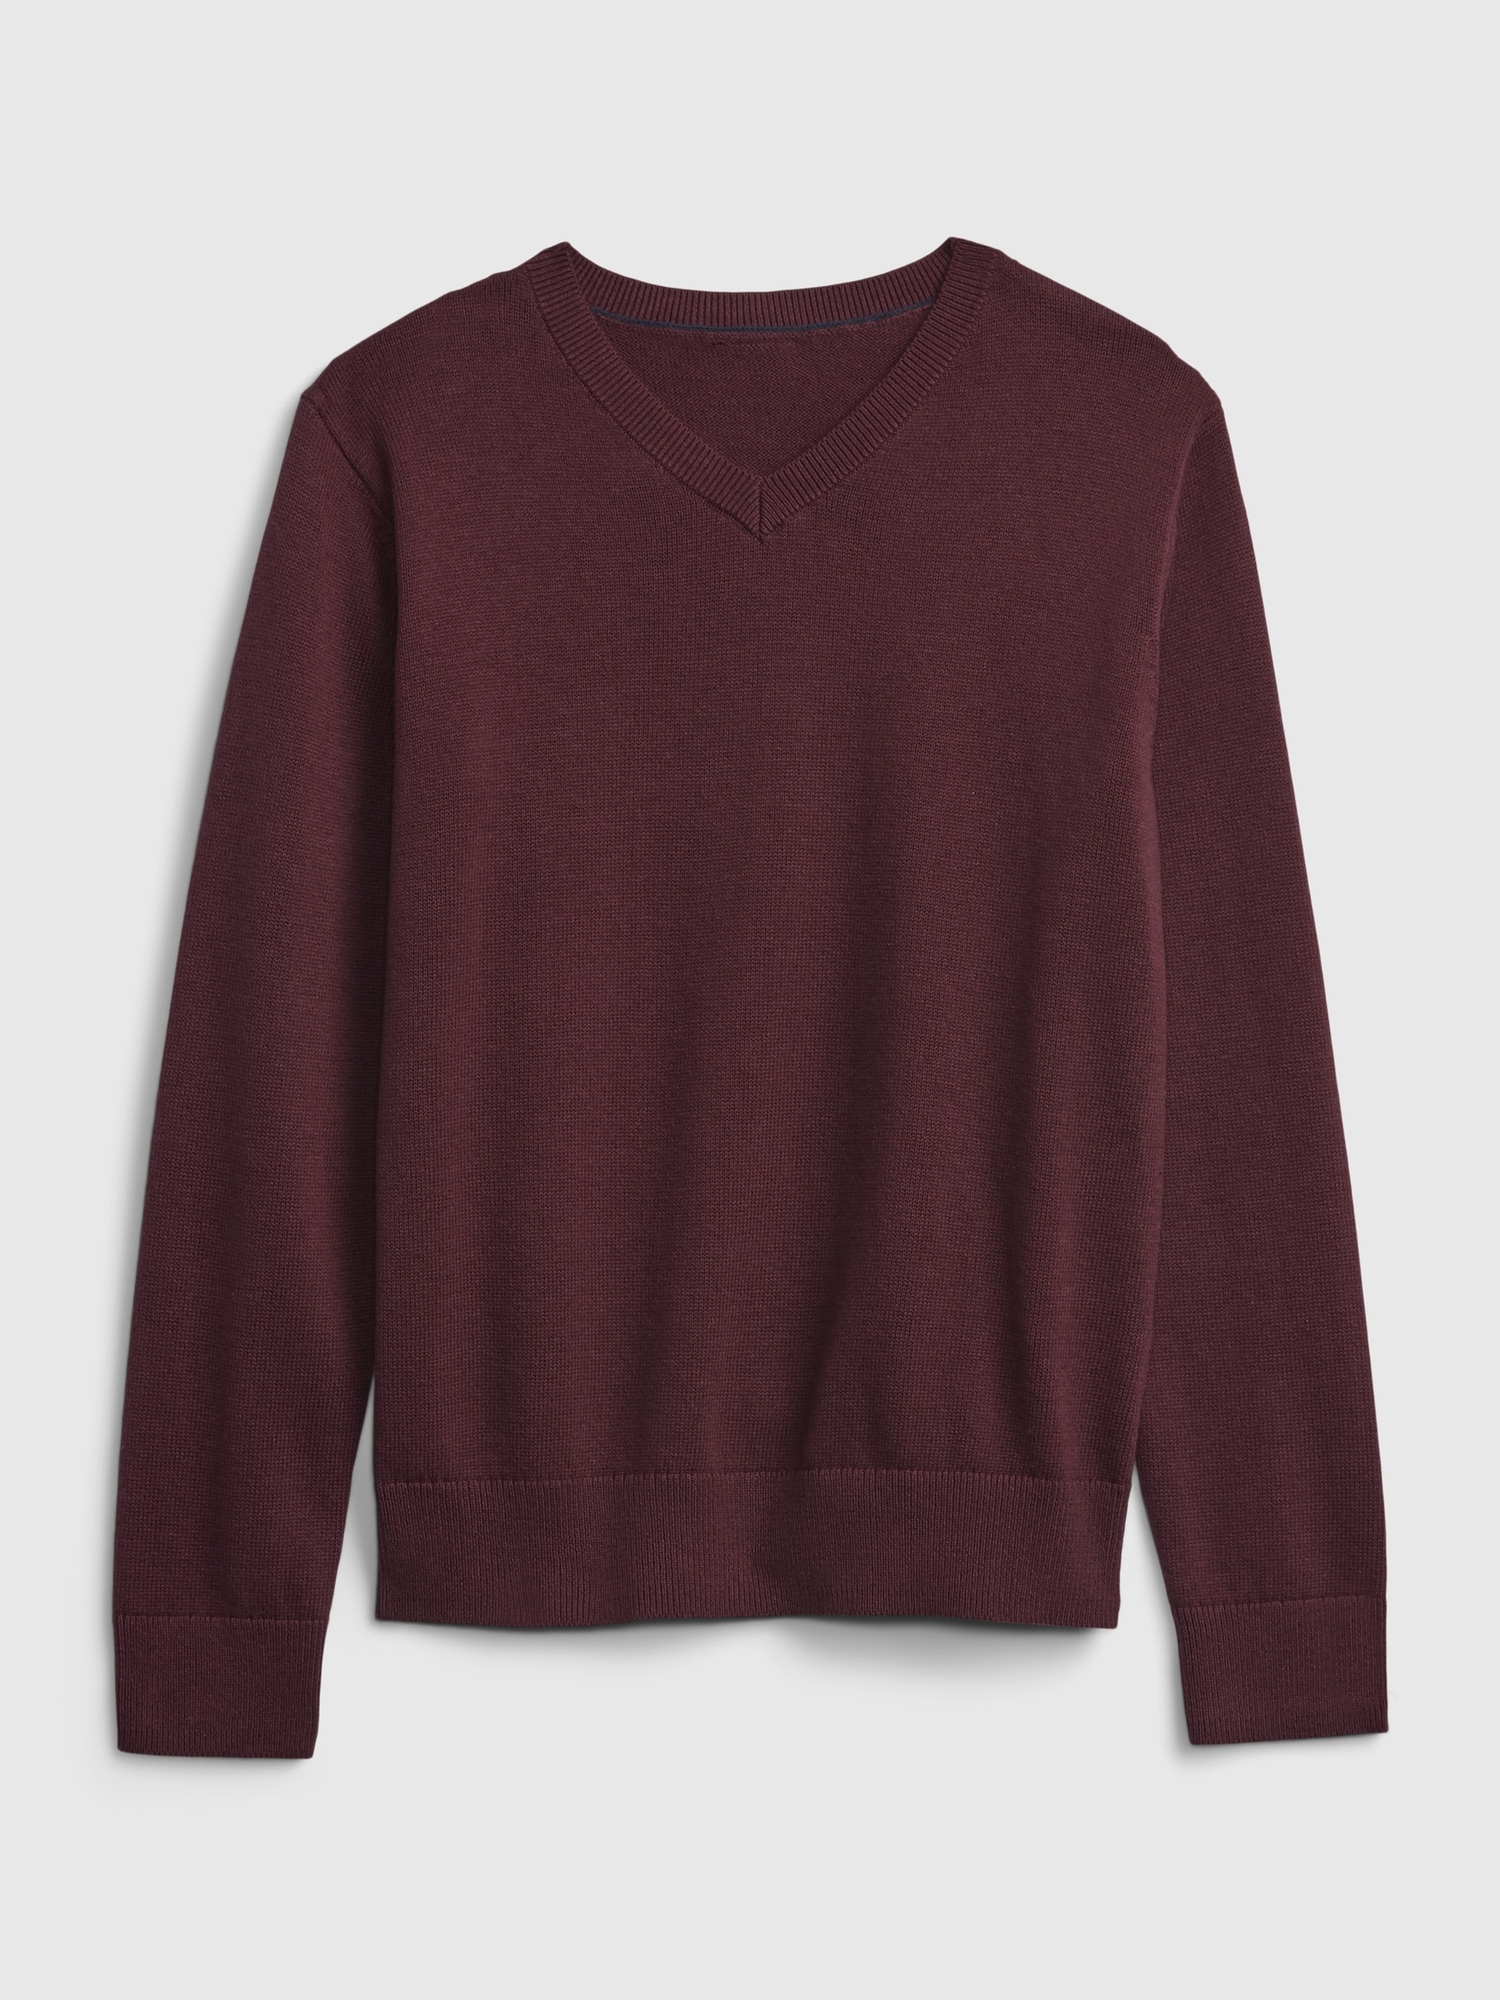 Gap Kids 100% Organic Cotton Uniform Sweater